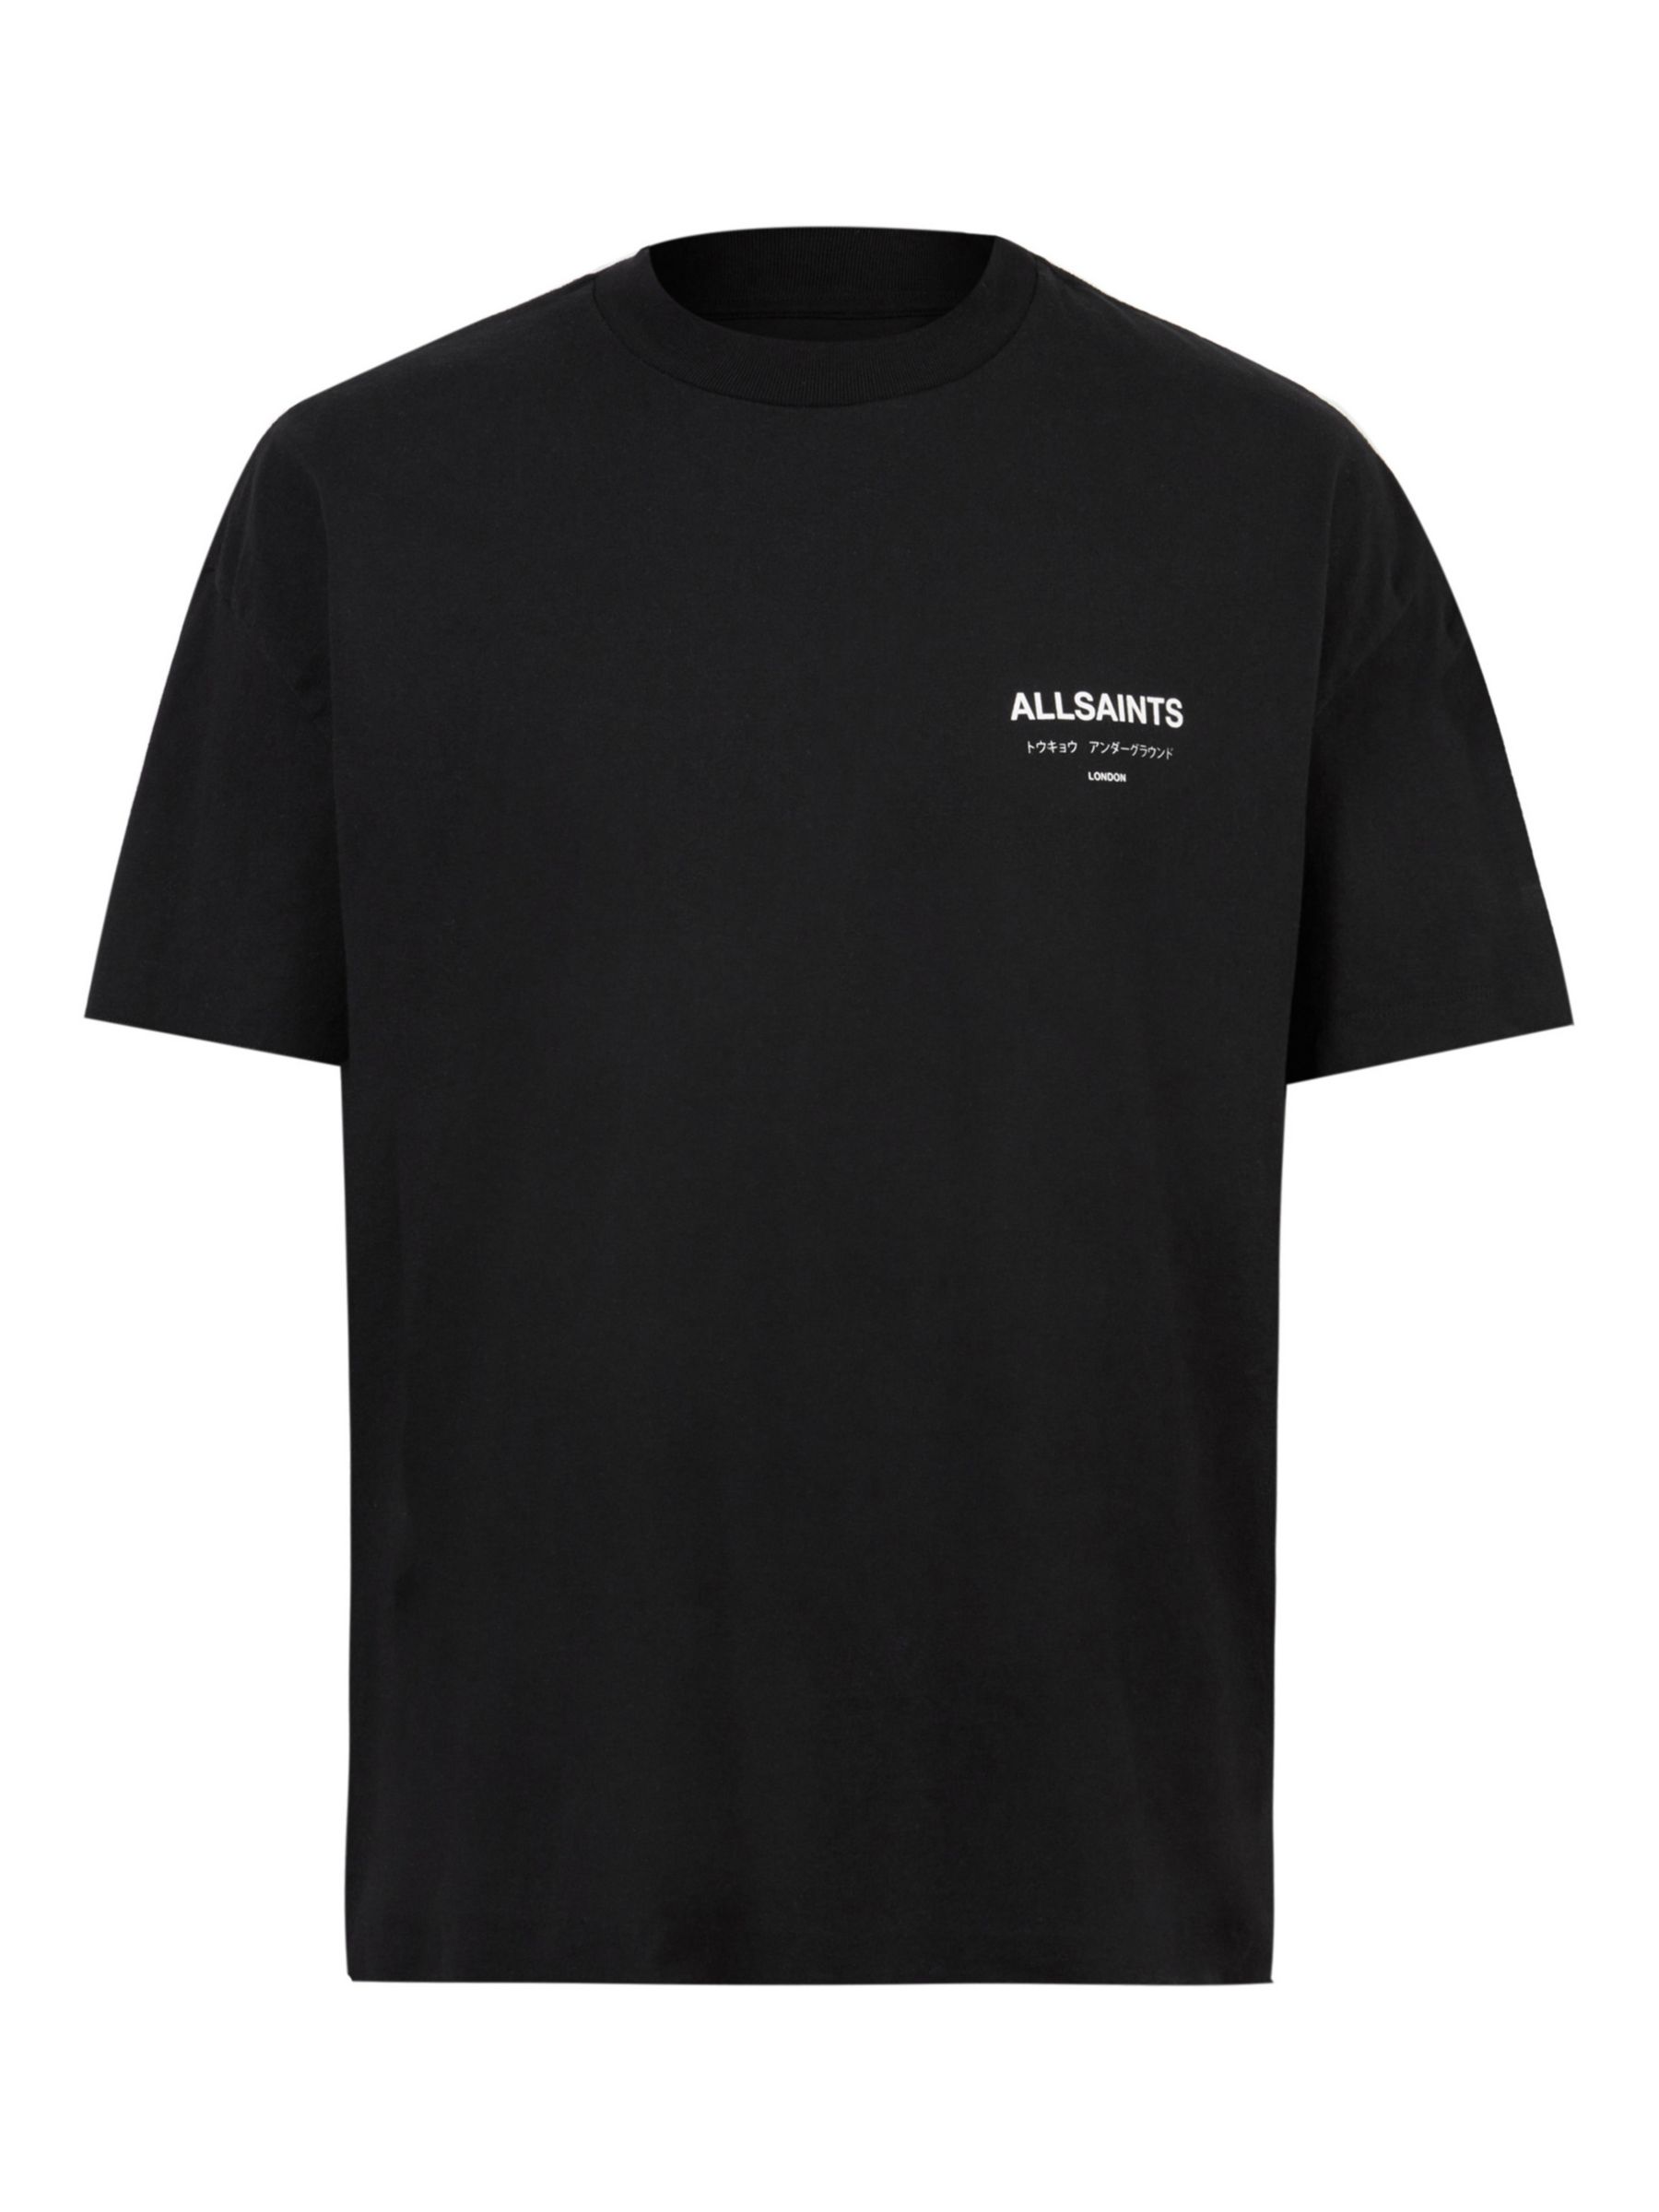 AllSaints Underground T-Shirt, Jet Black at John Lewis & Partners